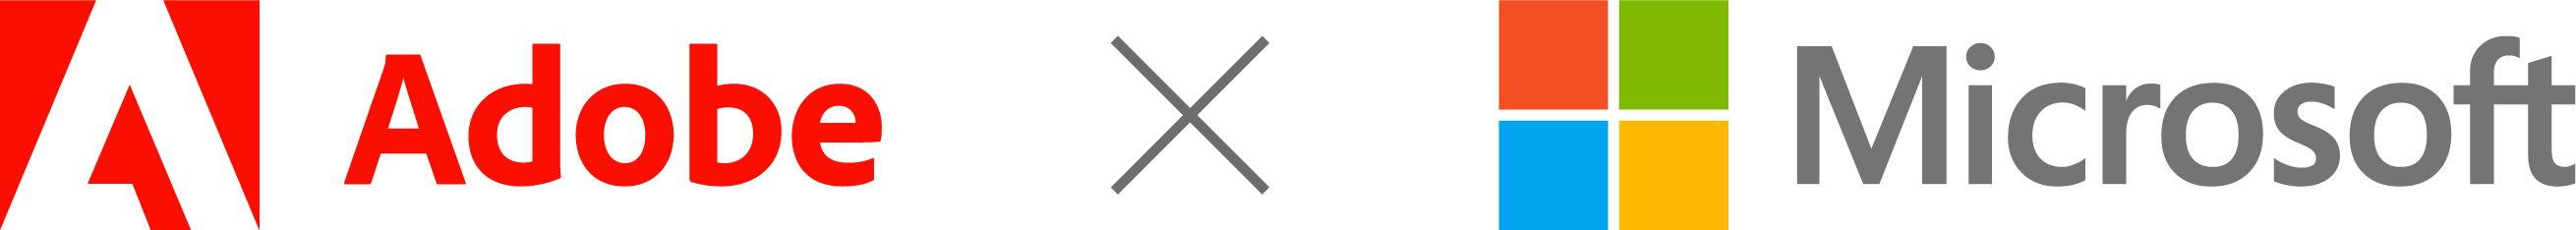 adobe and microsoft logo